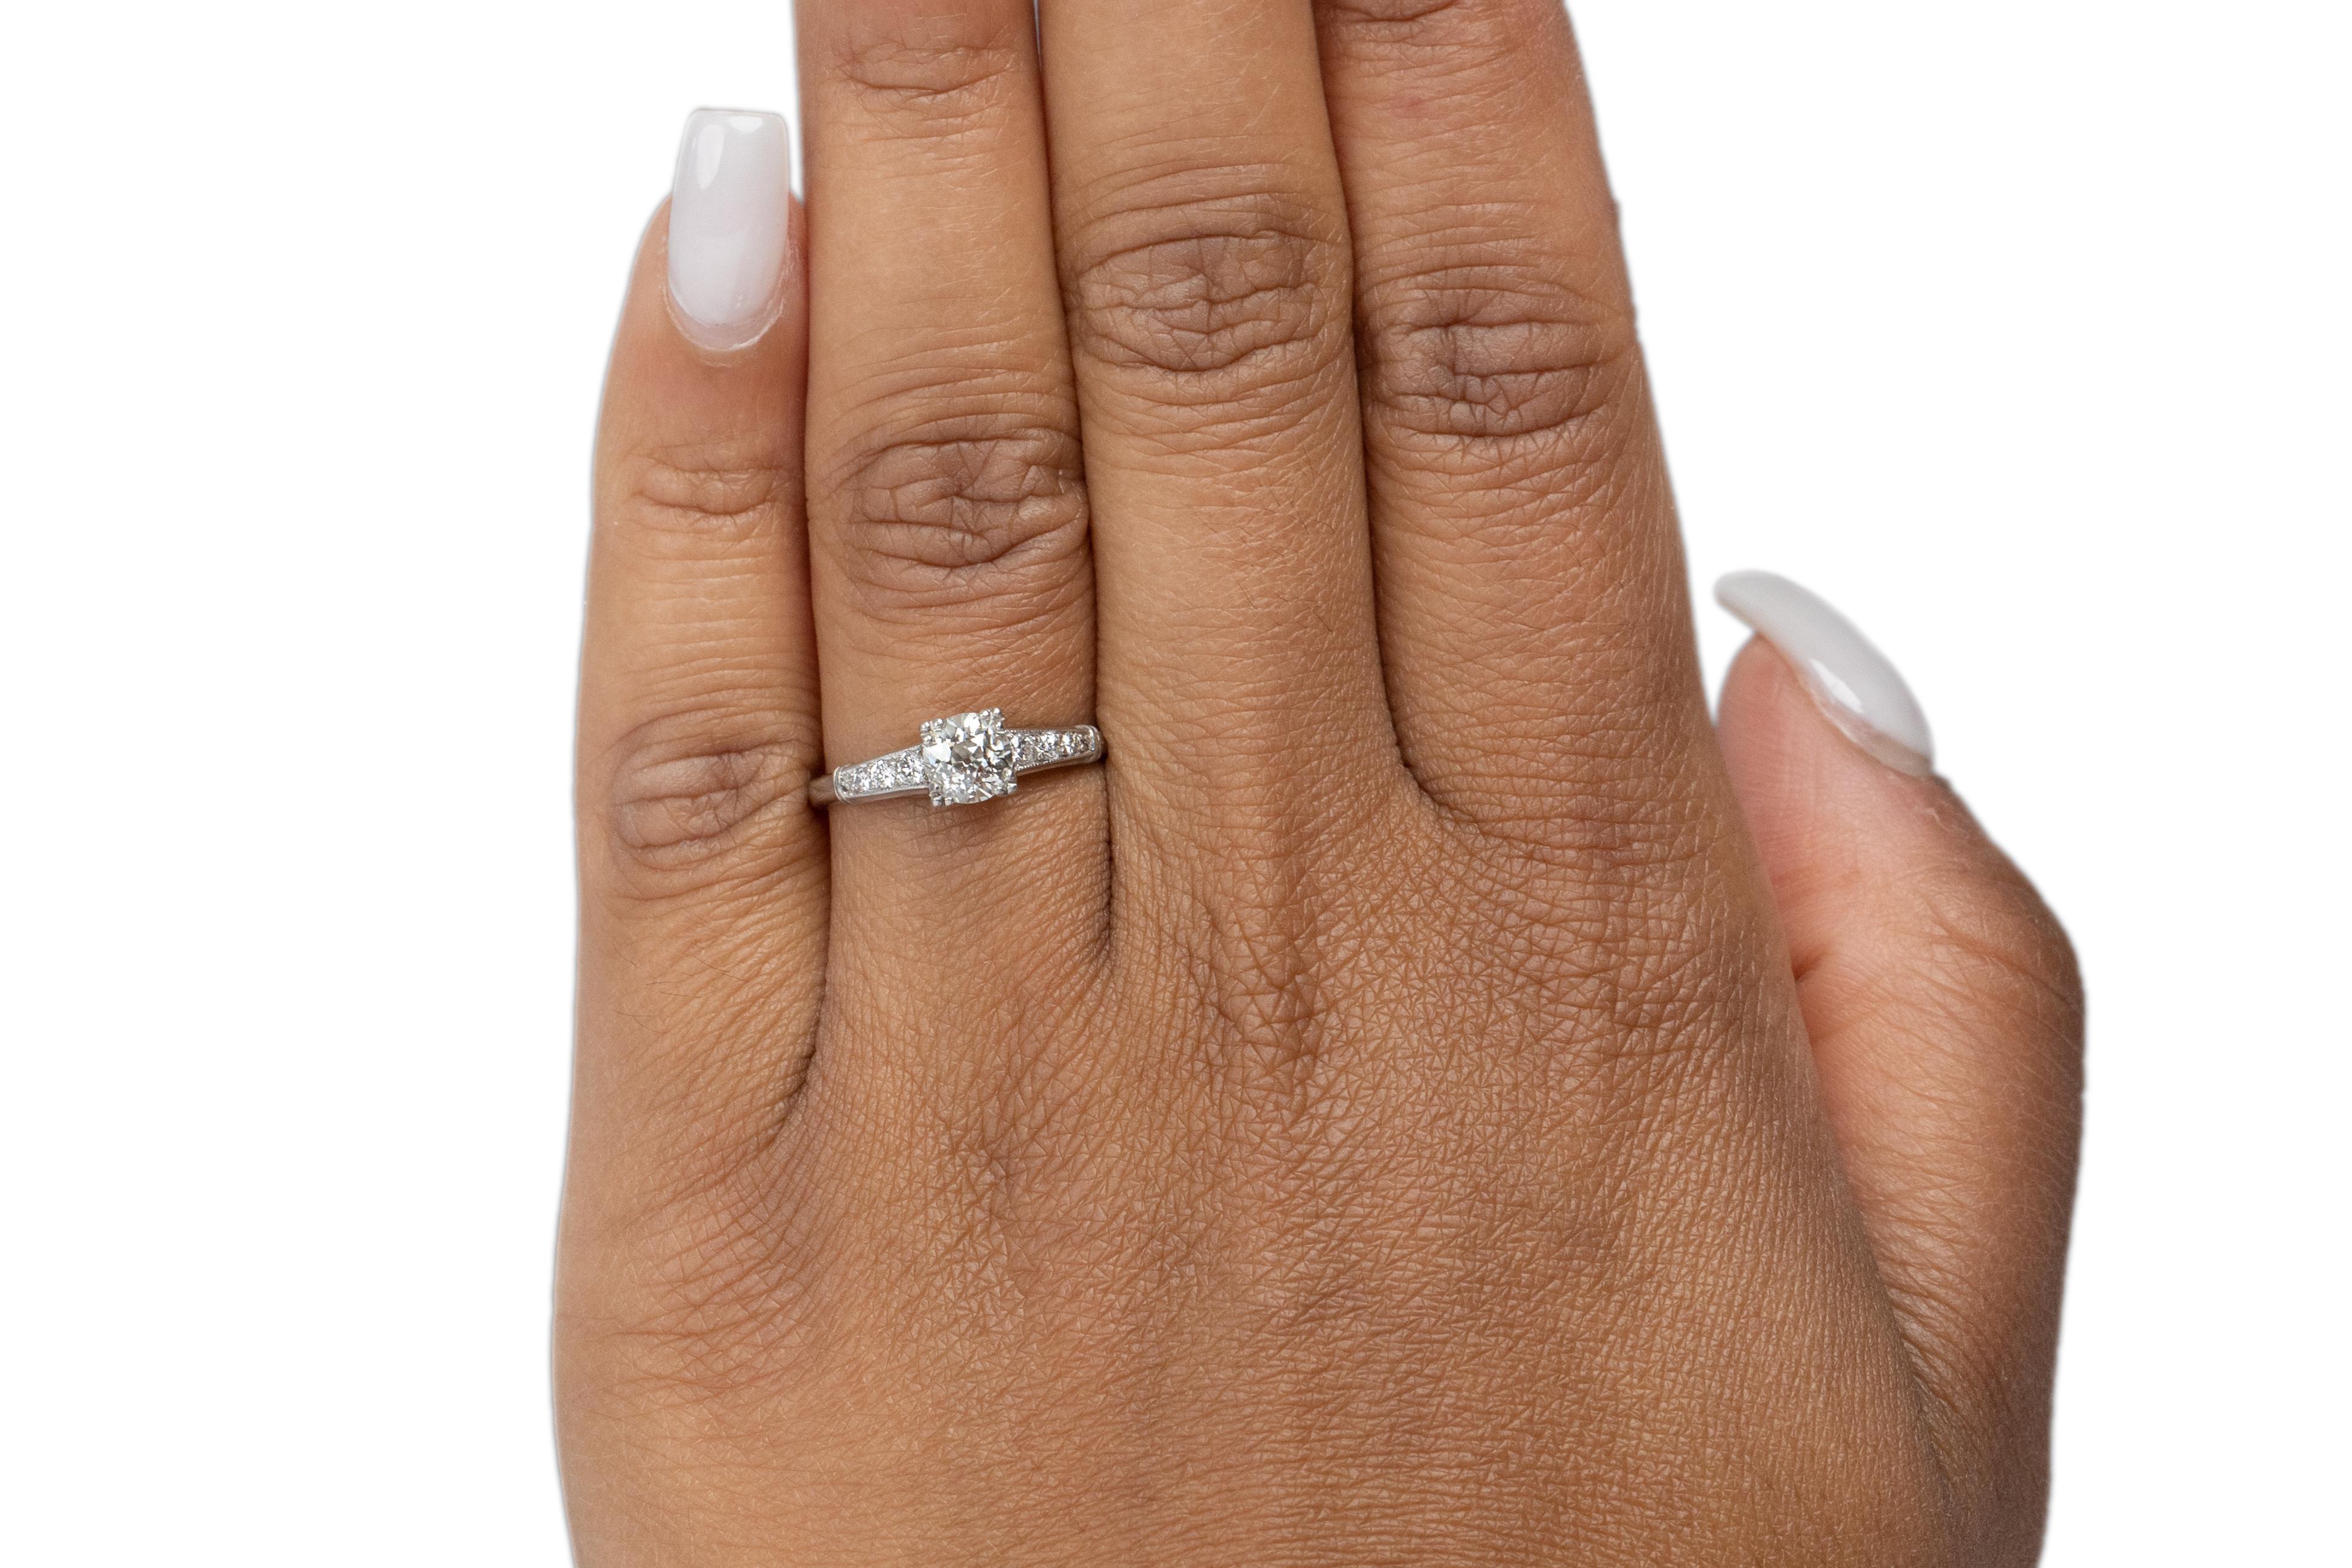 .62 carat diamond ring